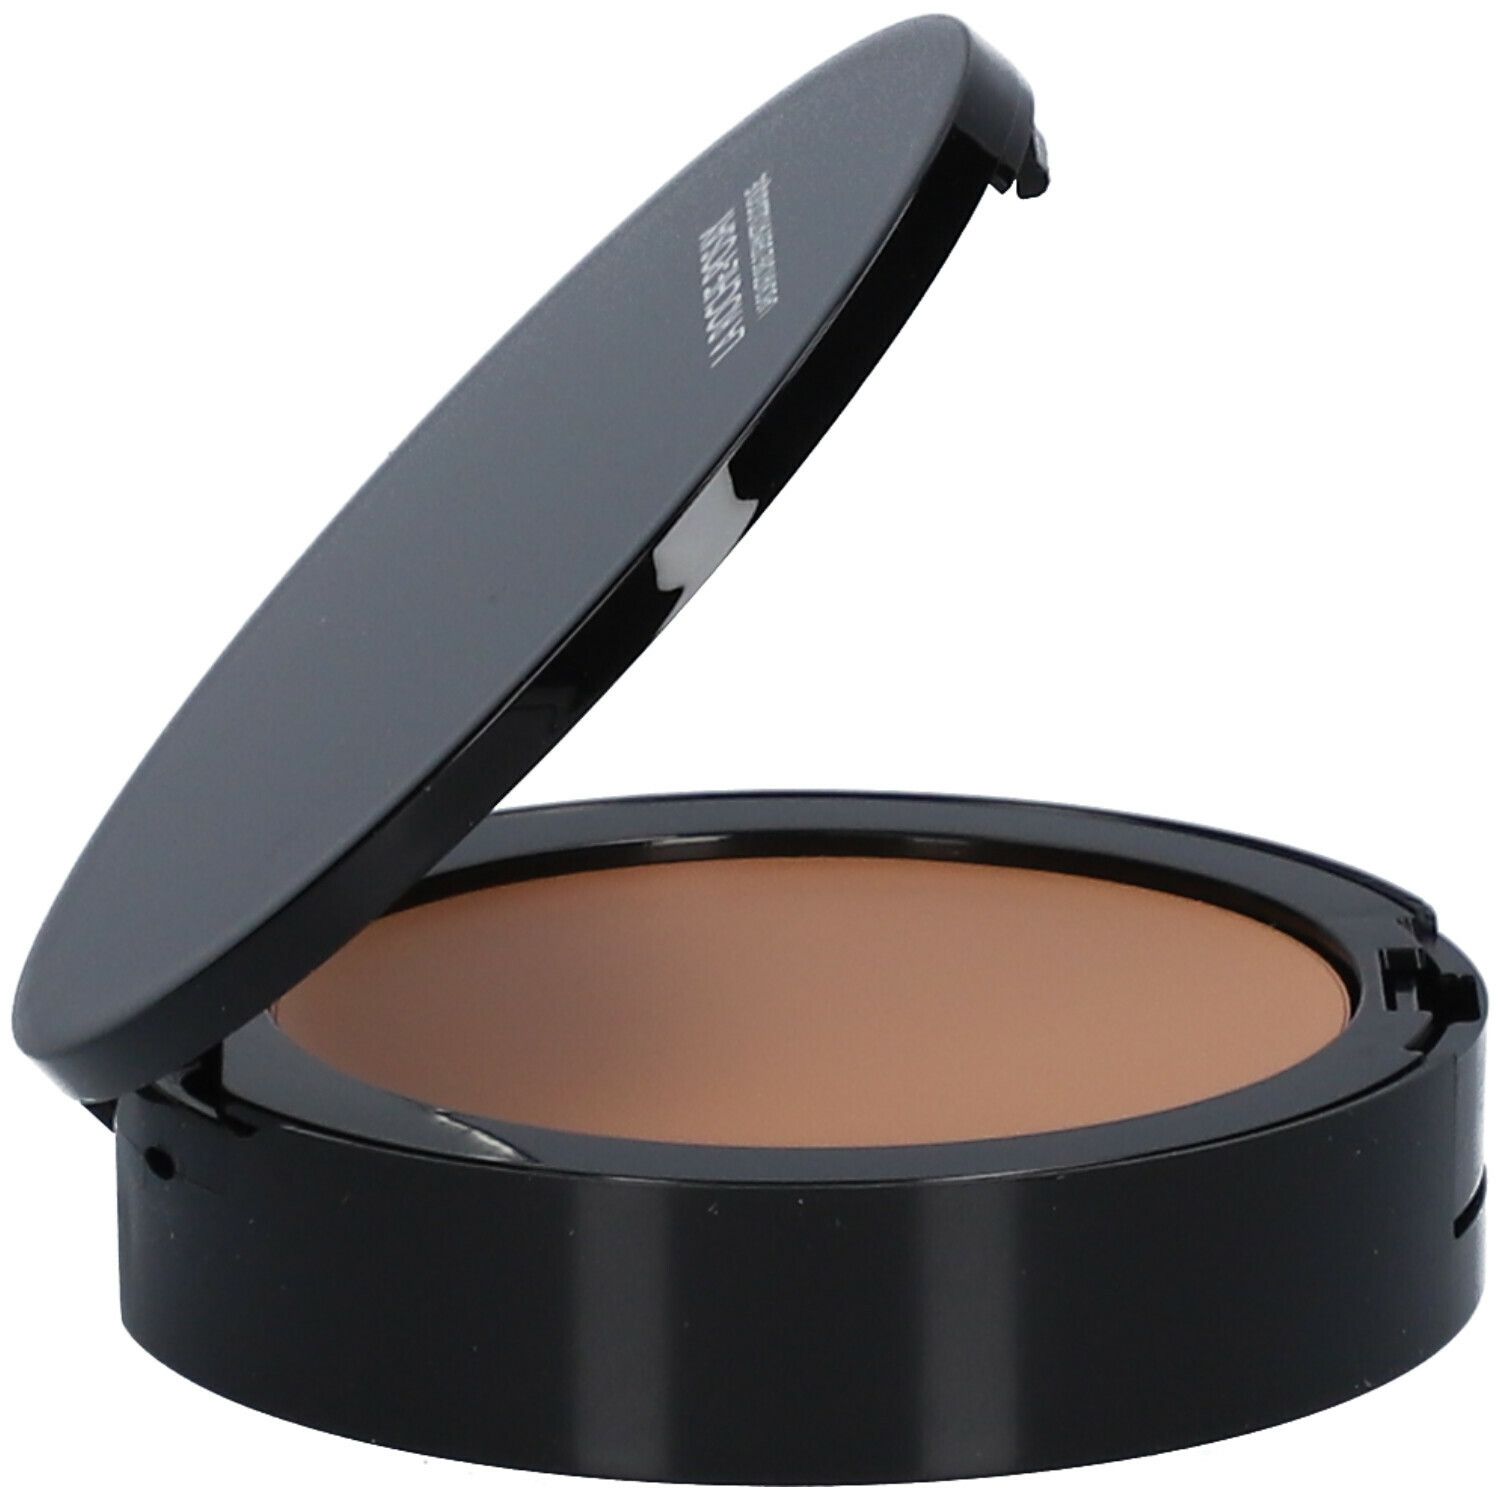 La Roche Posay Toleriane Kompakt-Creme Make-Up 15 R Doré LSF 35